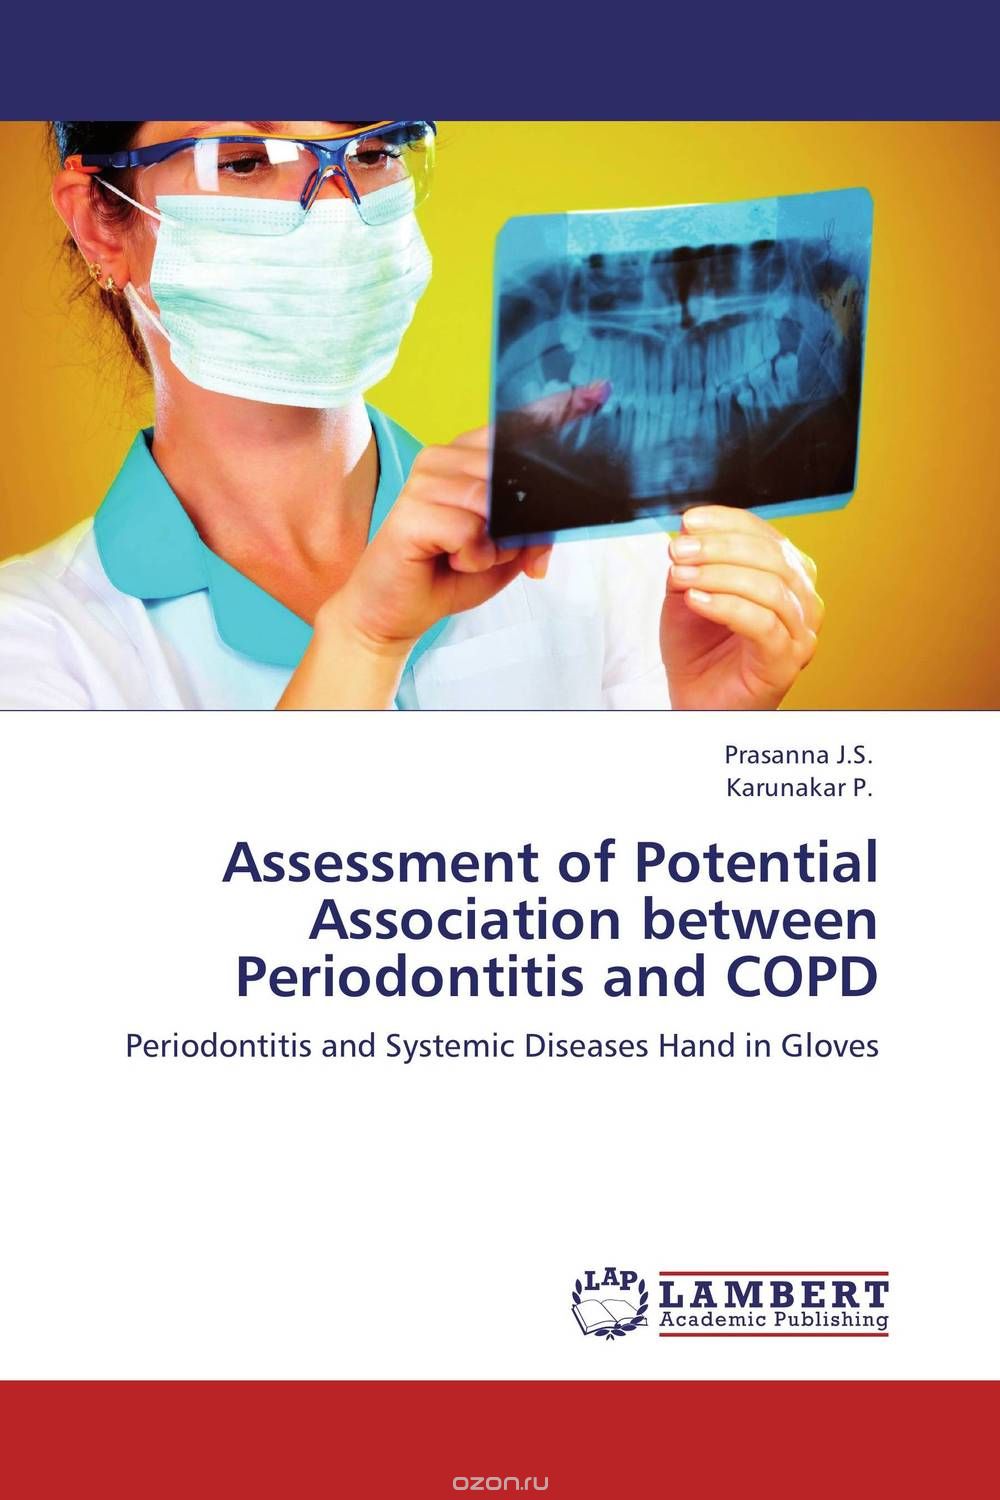 Скачать книгу "Assessment of Potential Association between Periodontitis and COPD"